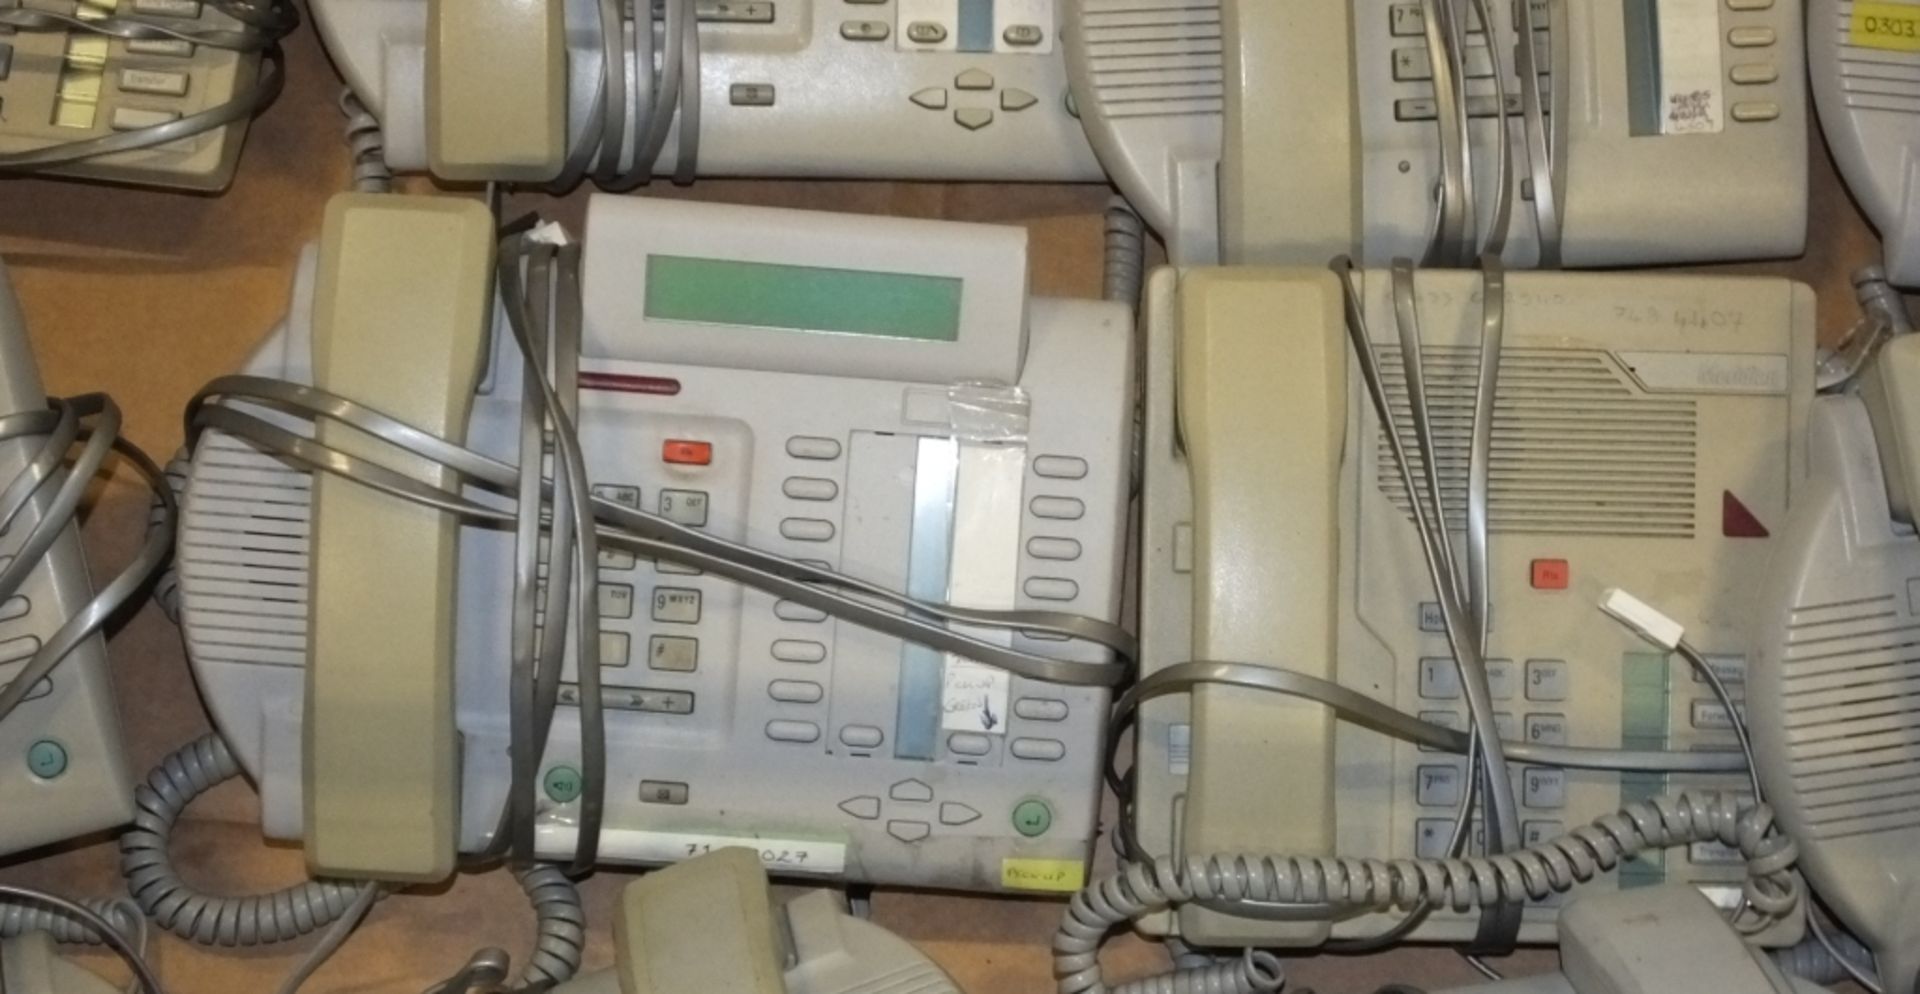 Meridian Office desk phones x48 - Image 2 of 3